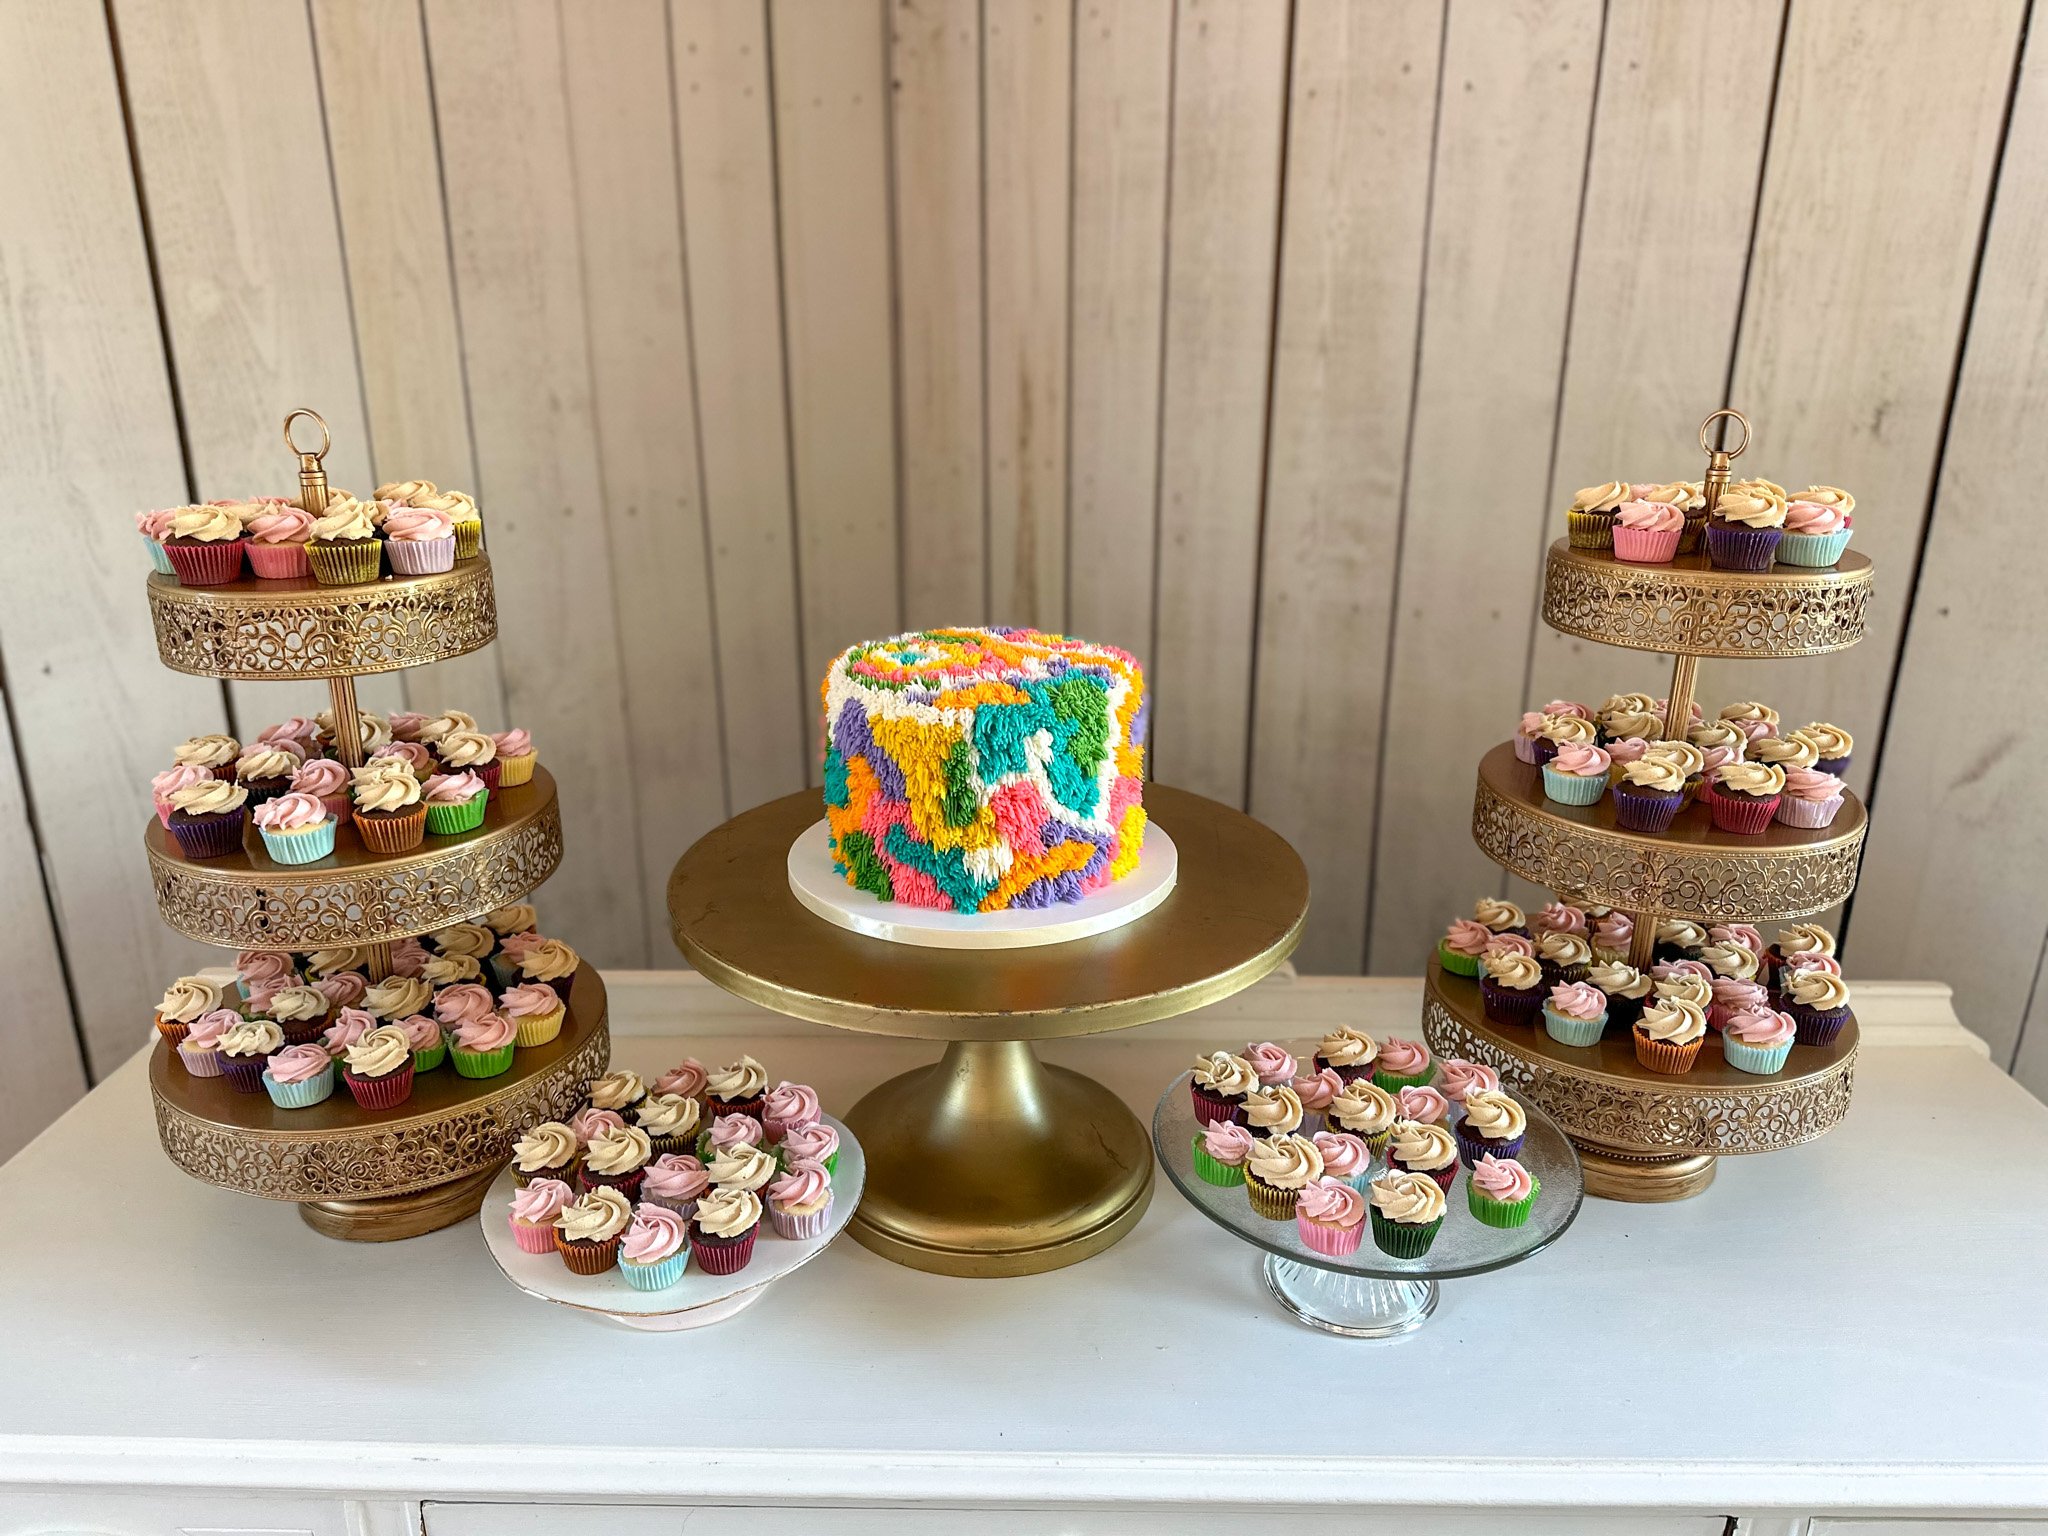 The Art of Indulgence: Artful Cake and Invitation Pairings